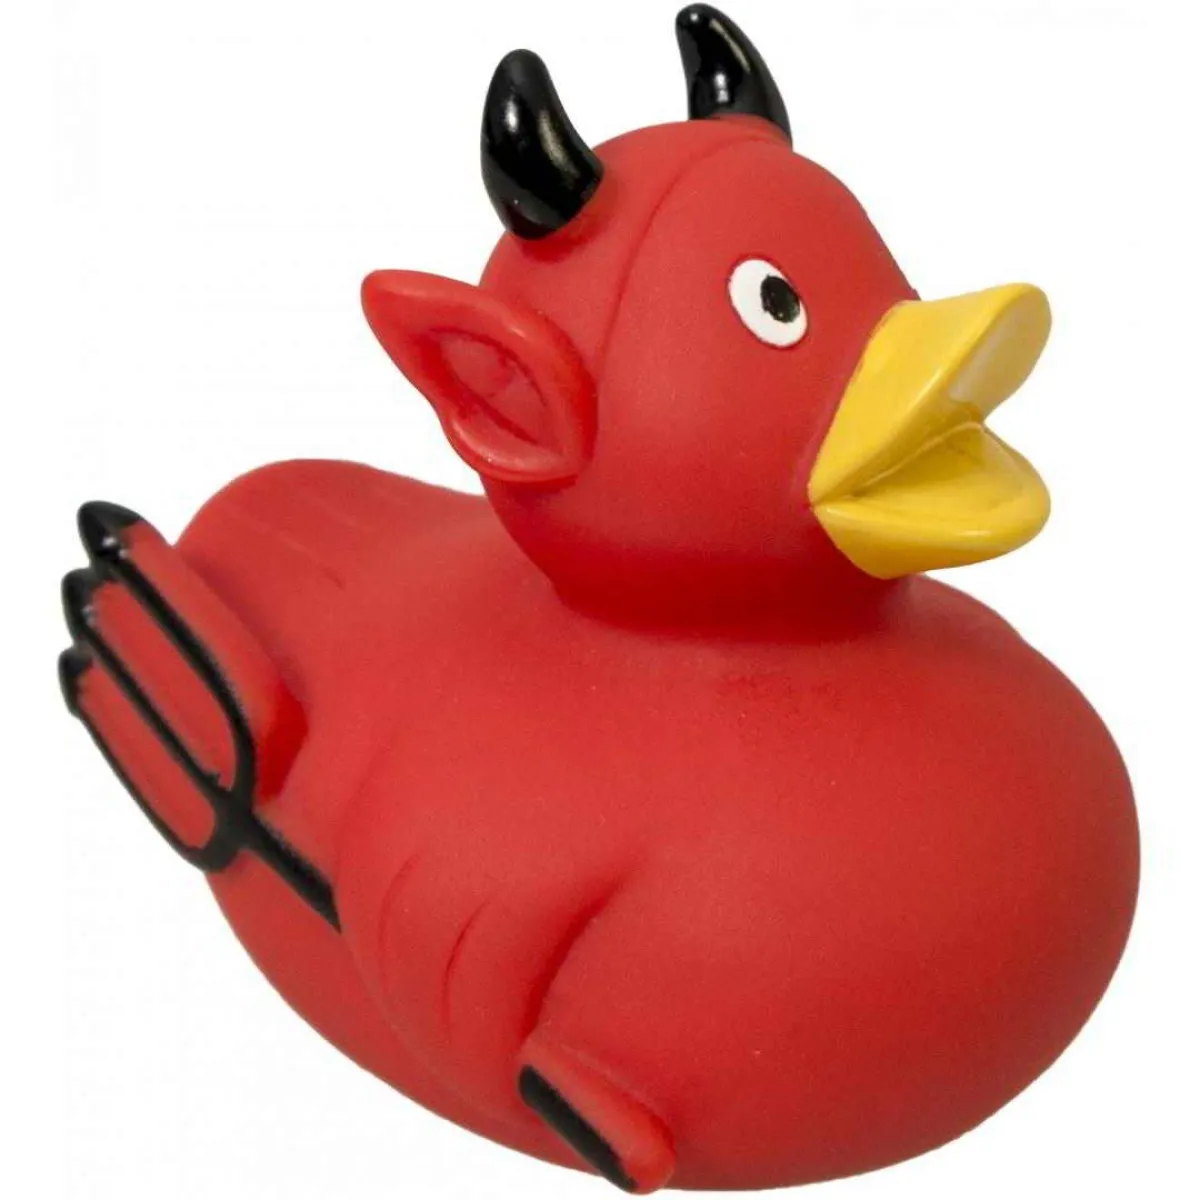 Bath duck - squeaky duck devil